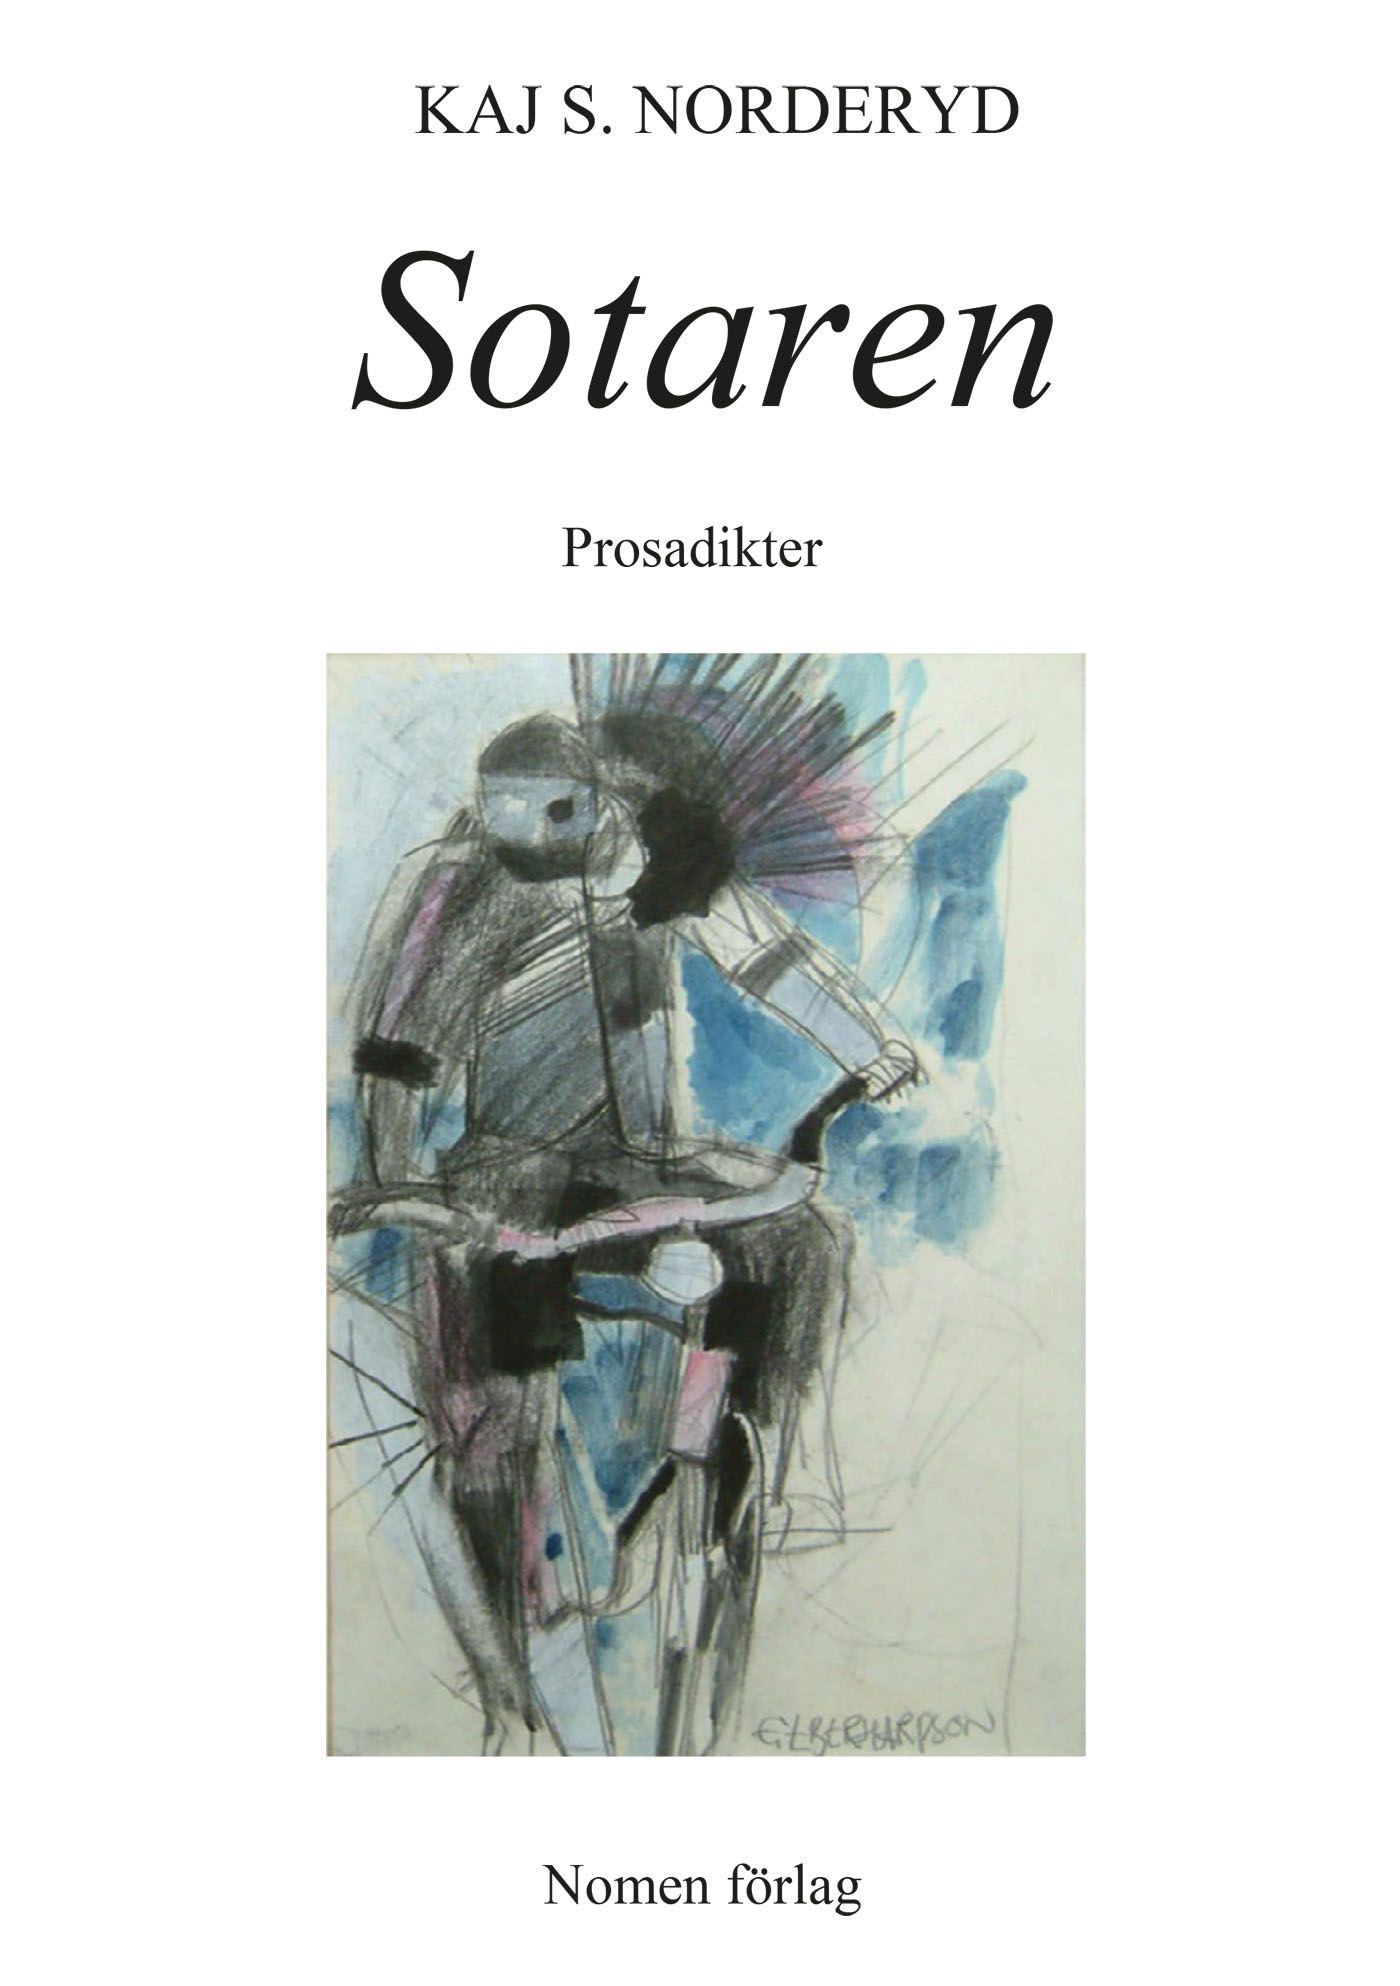 Sotaren - Prosadikter, eBook by Kaj S. Norderyd